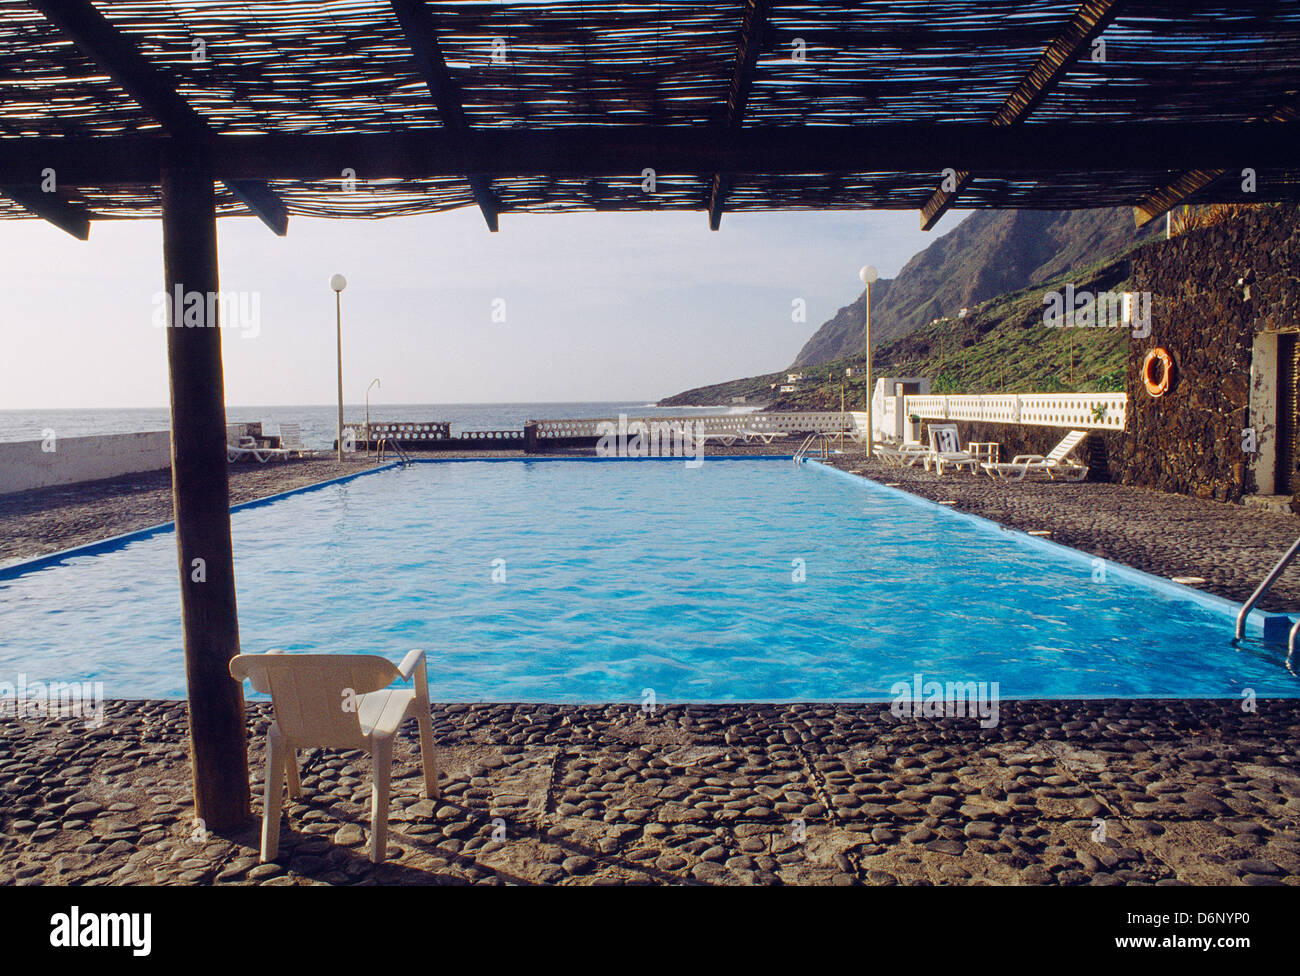 Swimming pool nearby the sea. Parador de turismo, El Hierro island, Canary Islands, Spain. Stock Photo